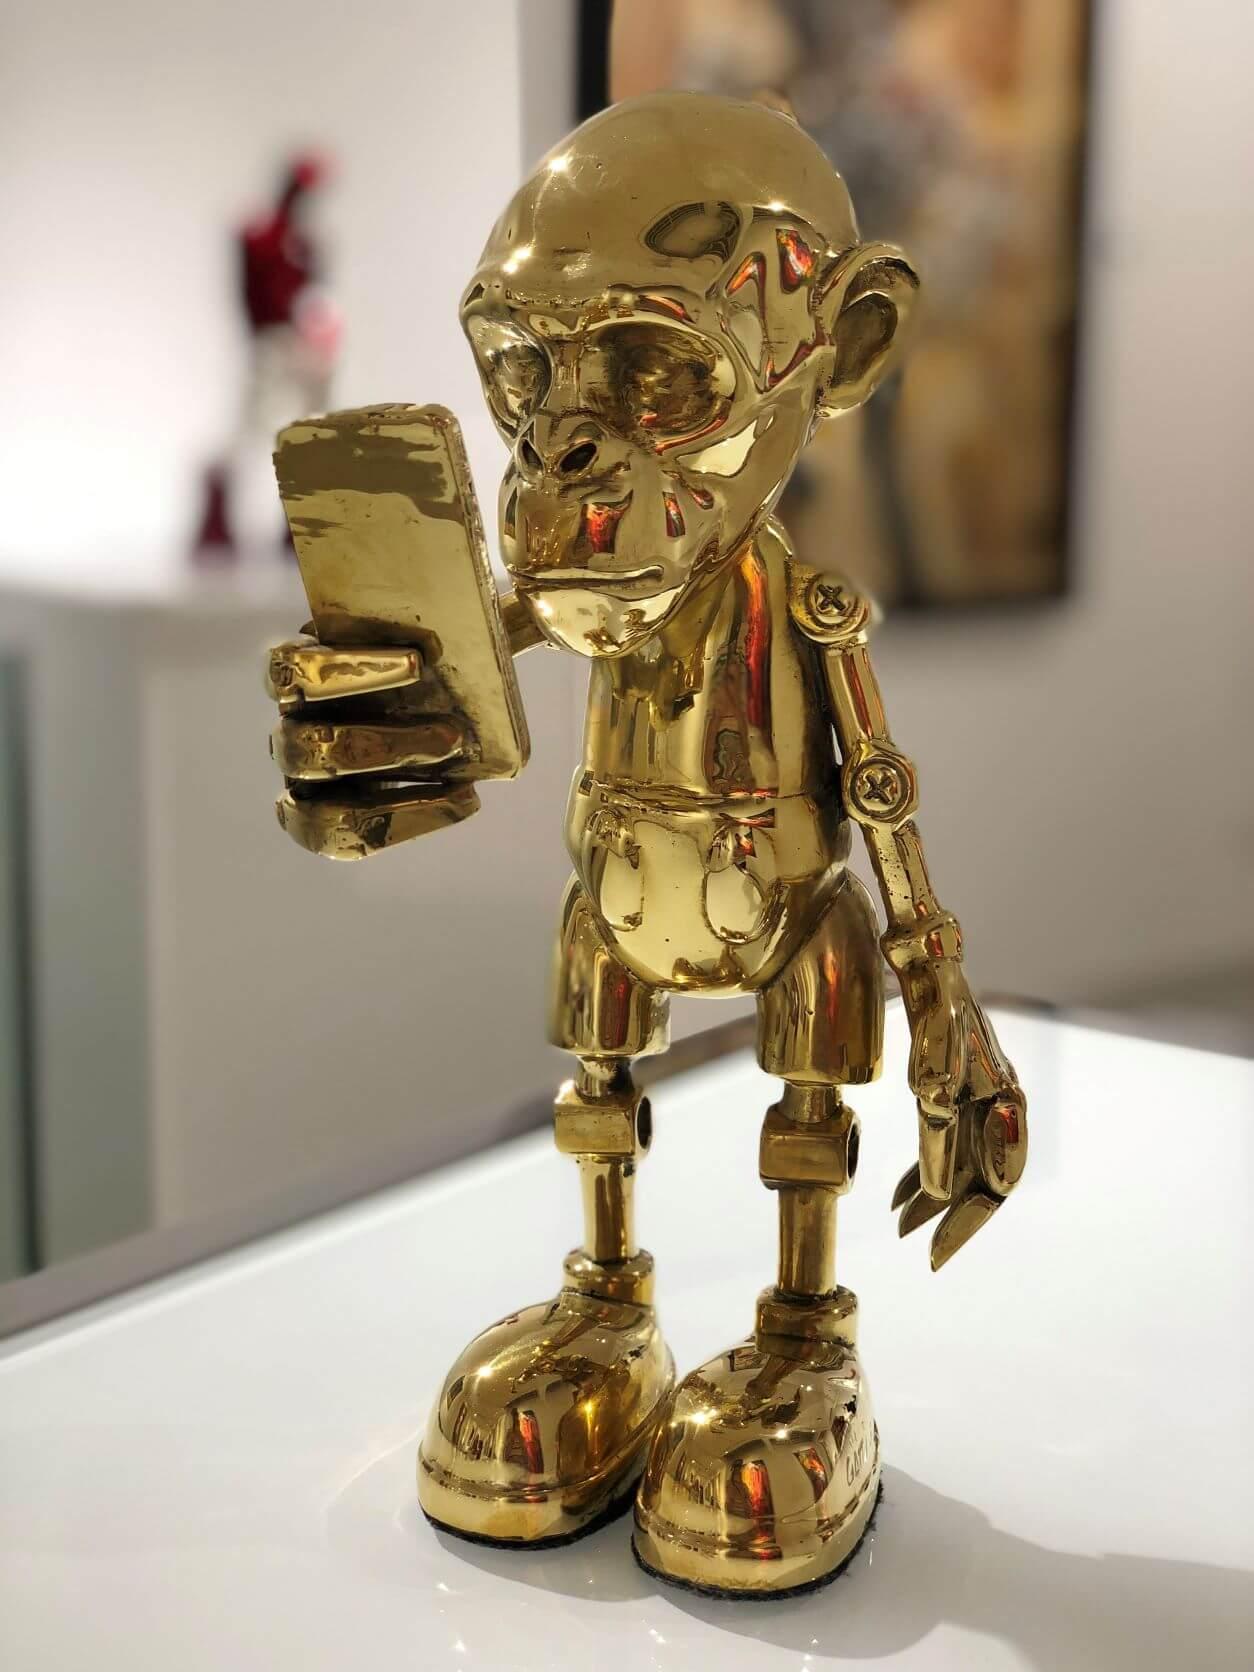 Beto Gatti Figurative Sculpture - Toy Art  - Golden bronze sculpture, 2022